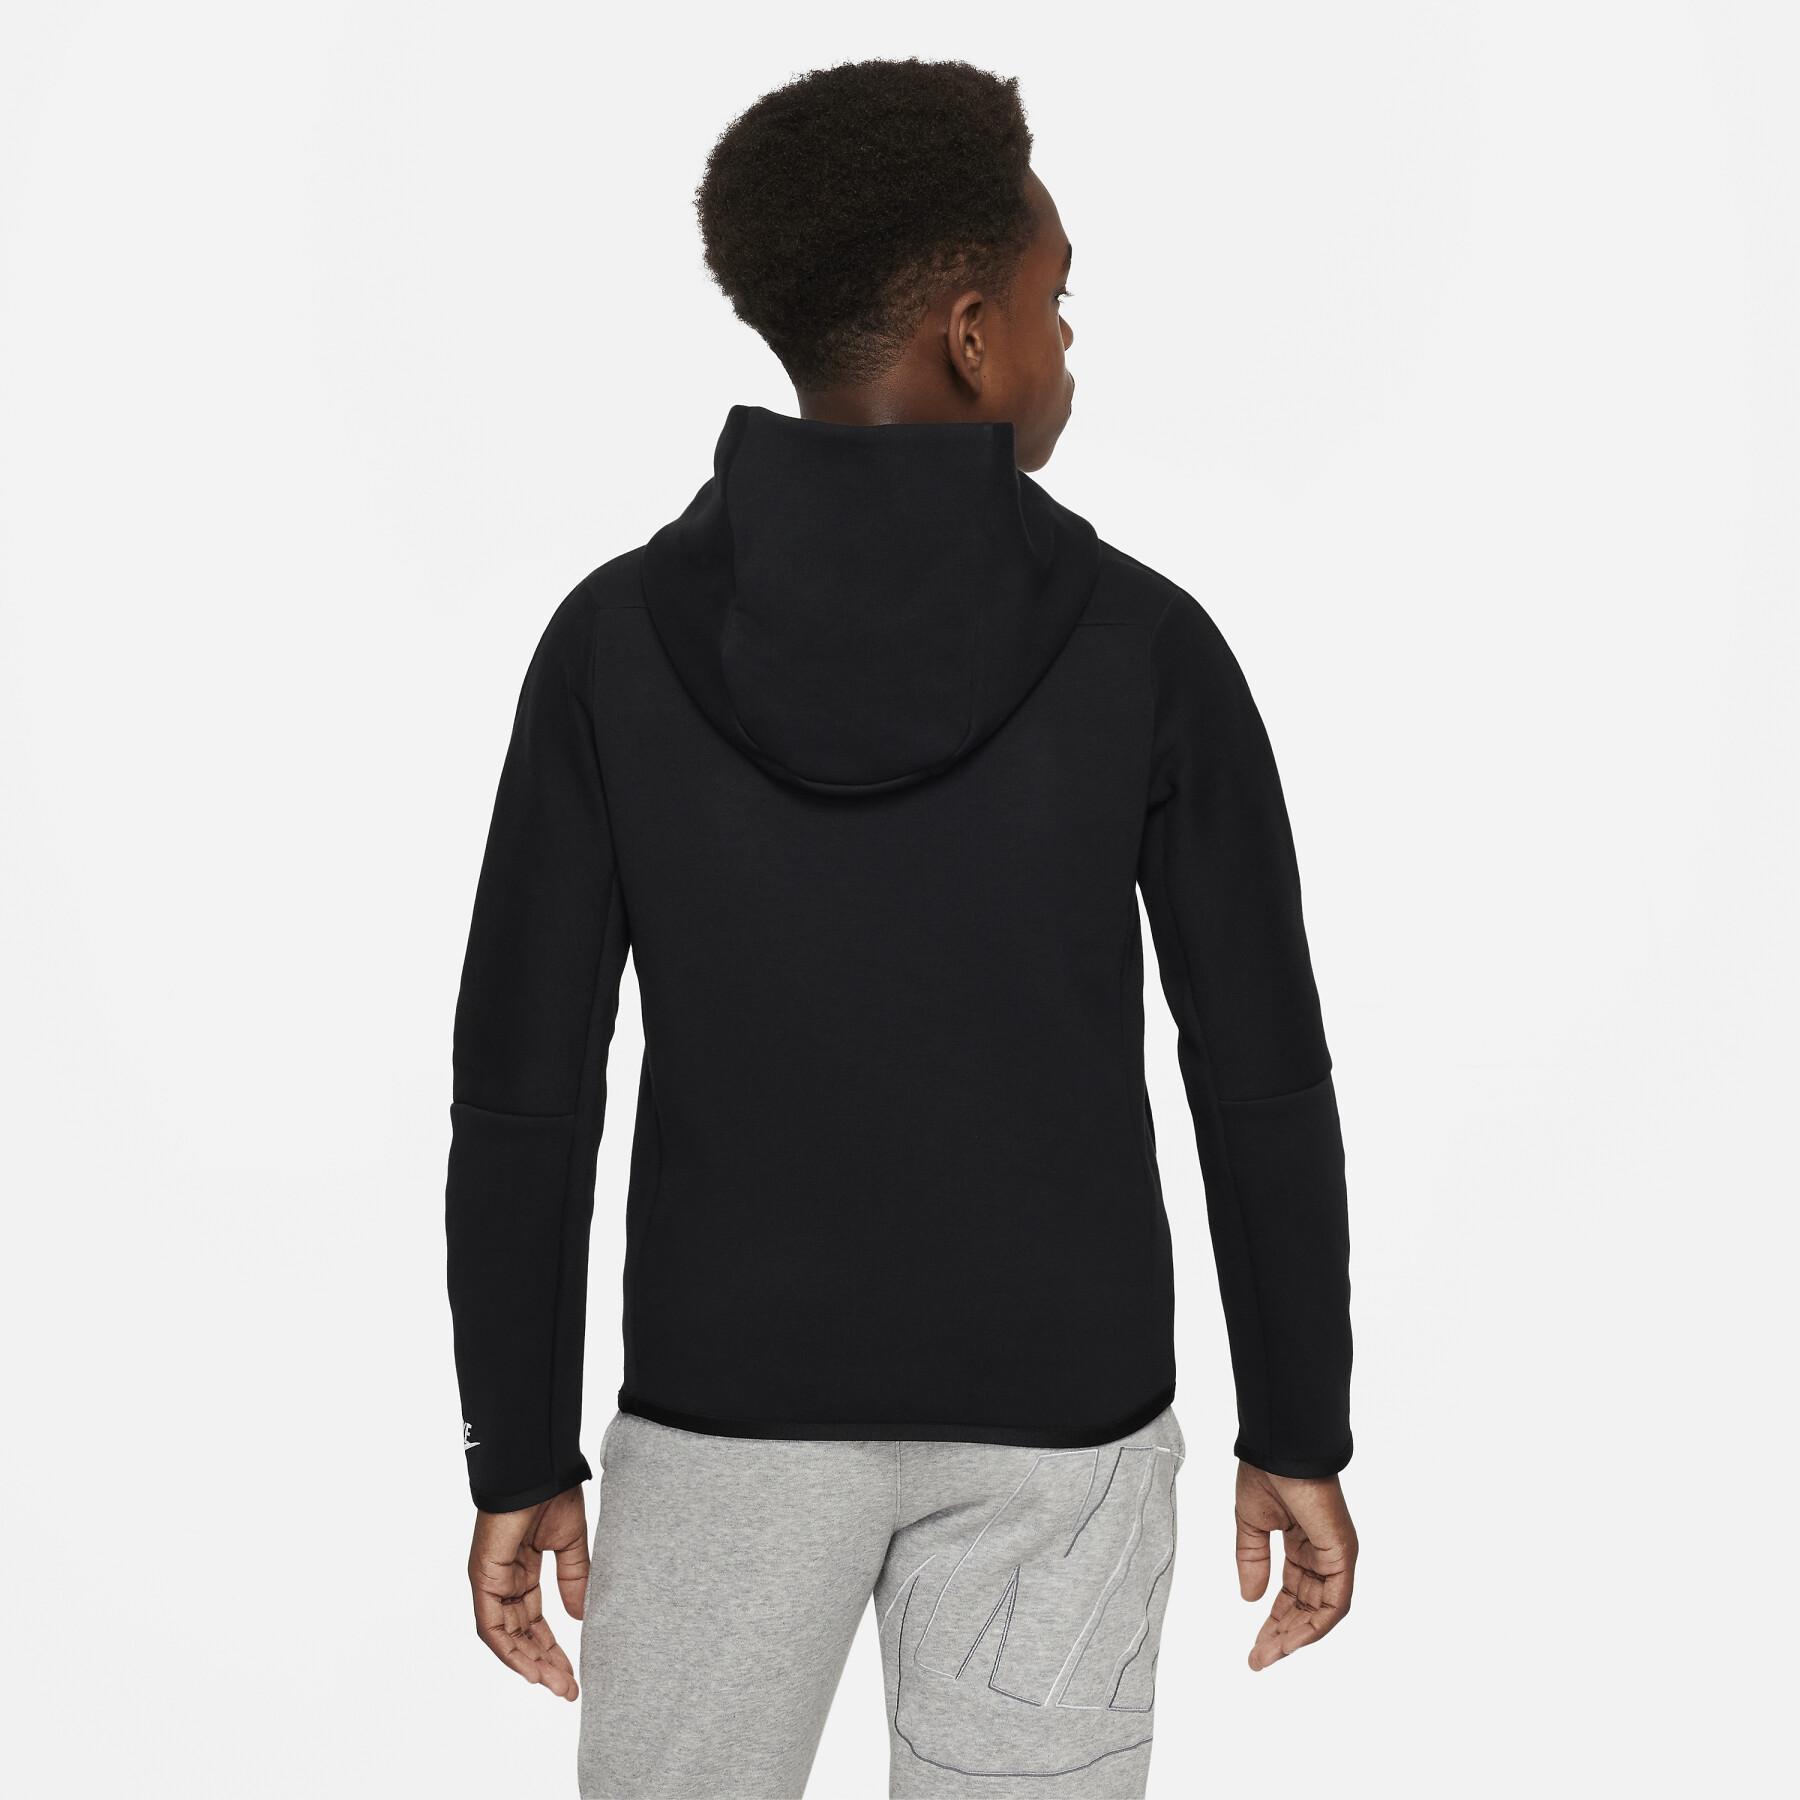 Sweatshirt hooded child Nike Tech Fleece HBR Essential